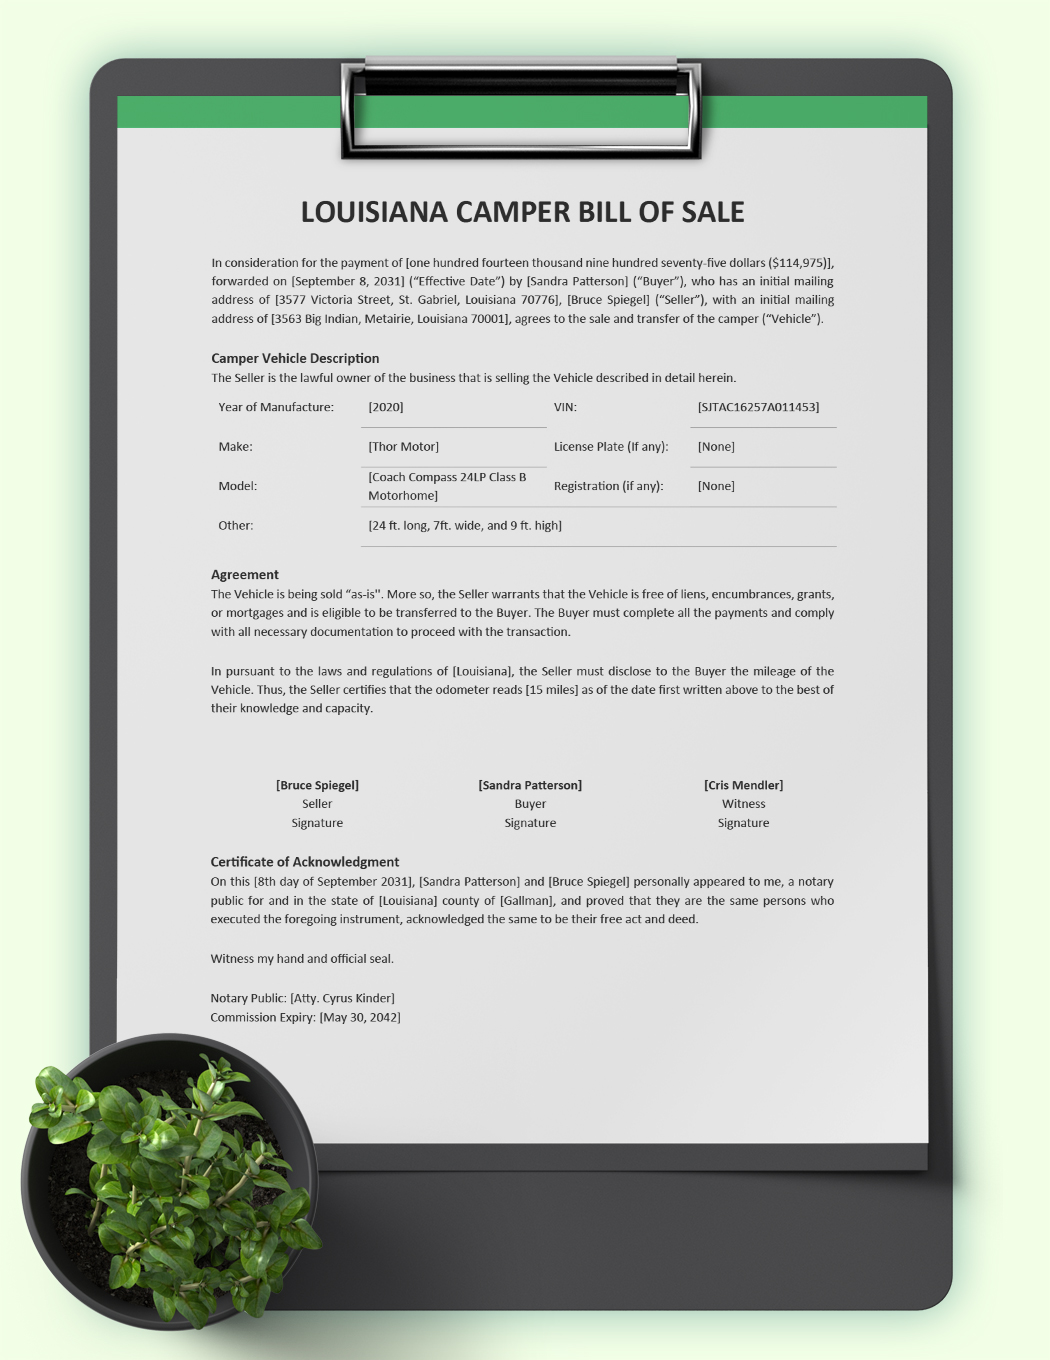 Louisiana Camper Bill of Sale Template